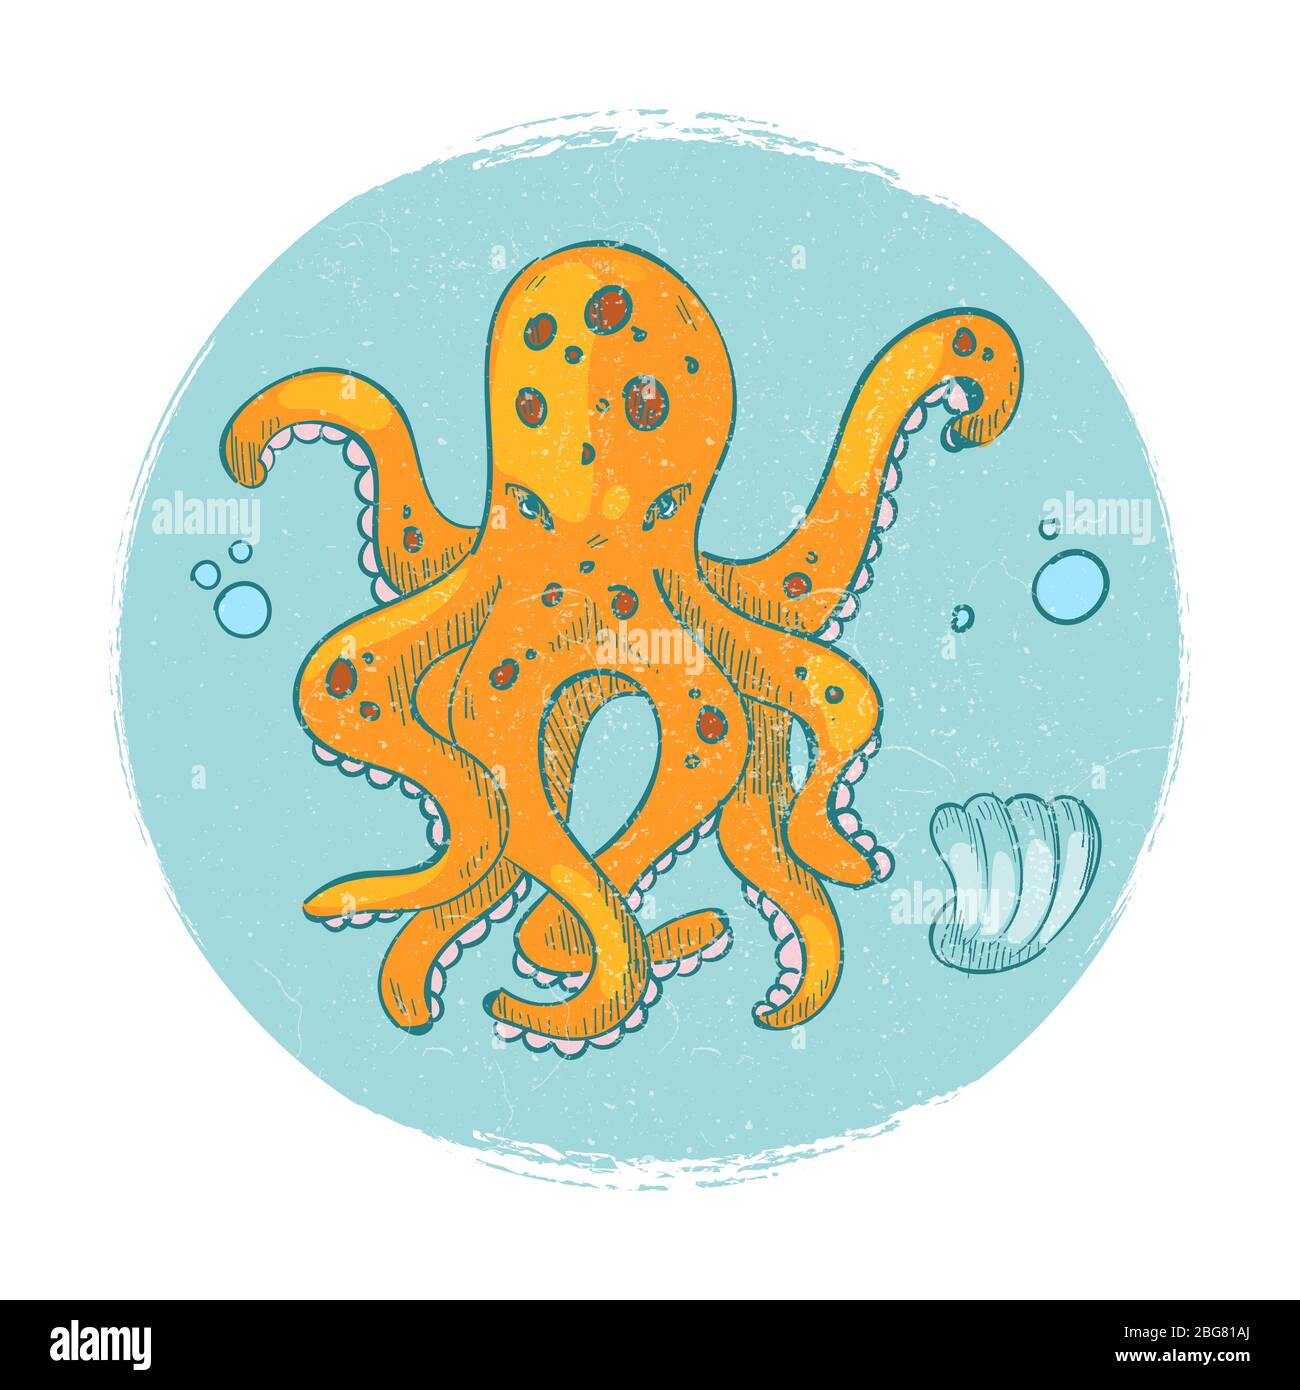 Cartoon character octopus emblem. Grunge vector ocean animal logo icon isolated illustration Stock Vector